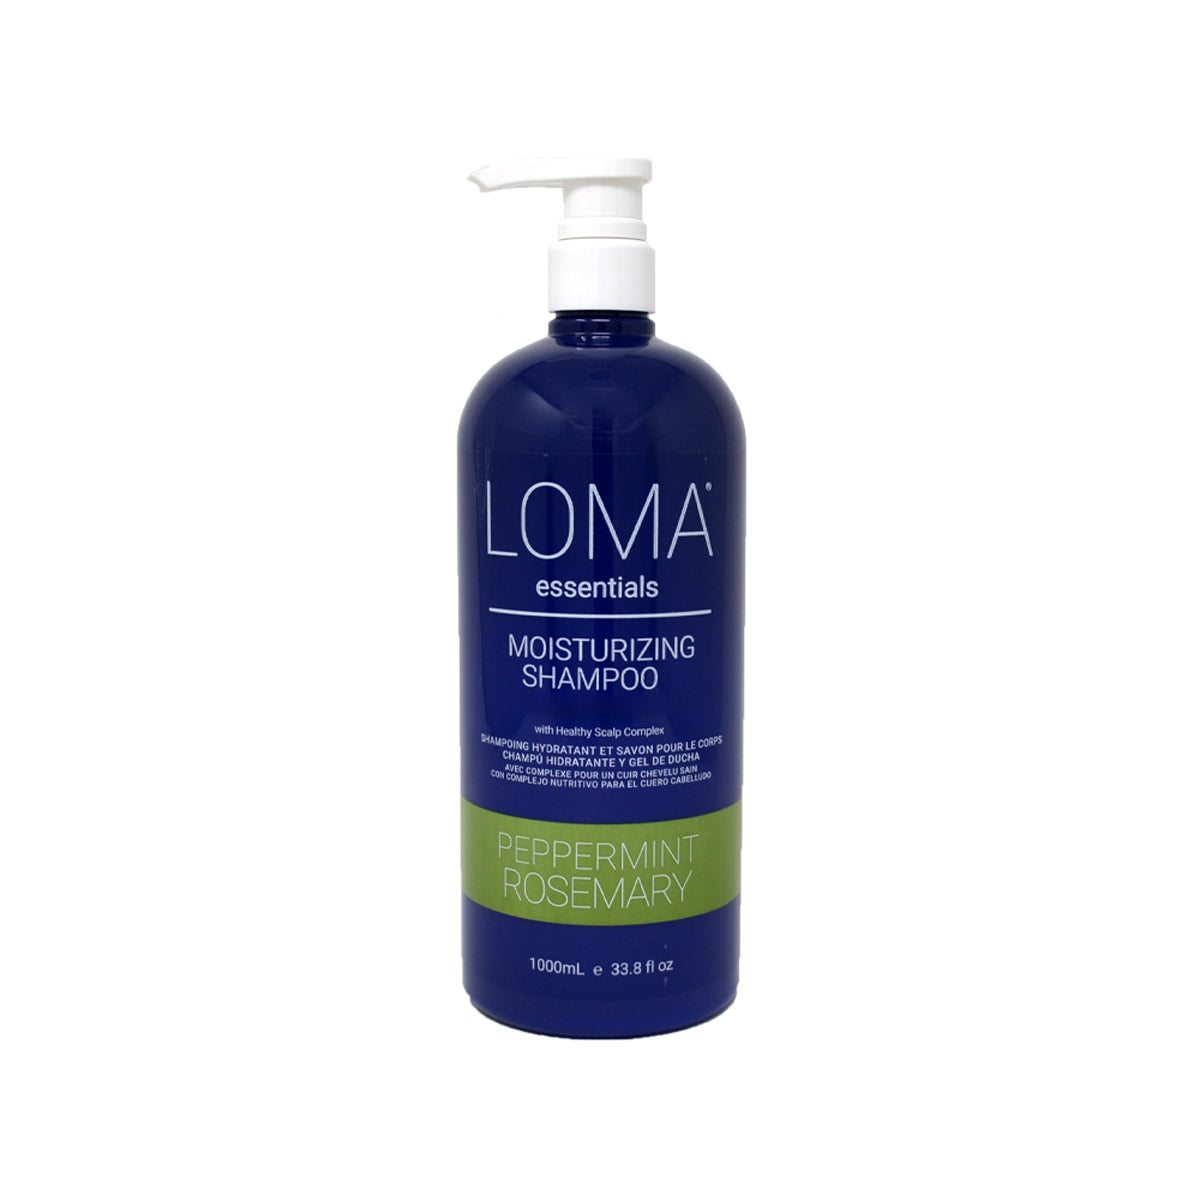 LOMA essentials Moisturizing Shampoo